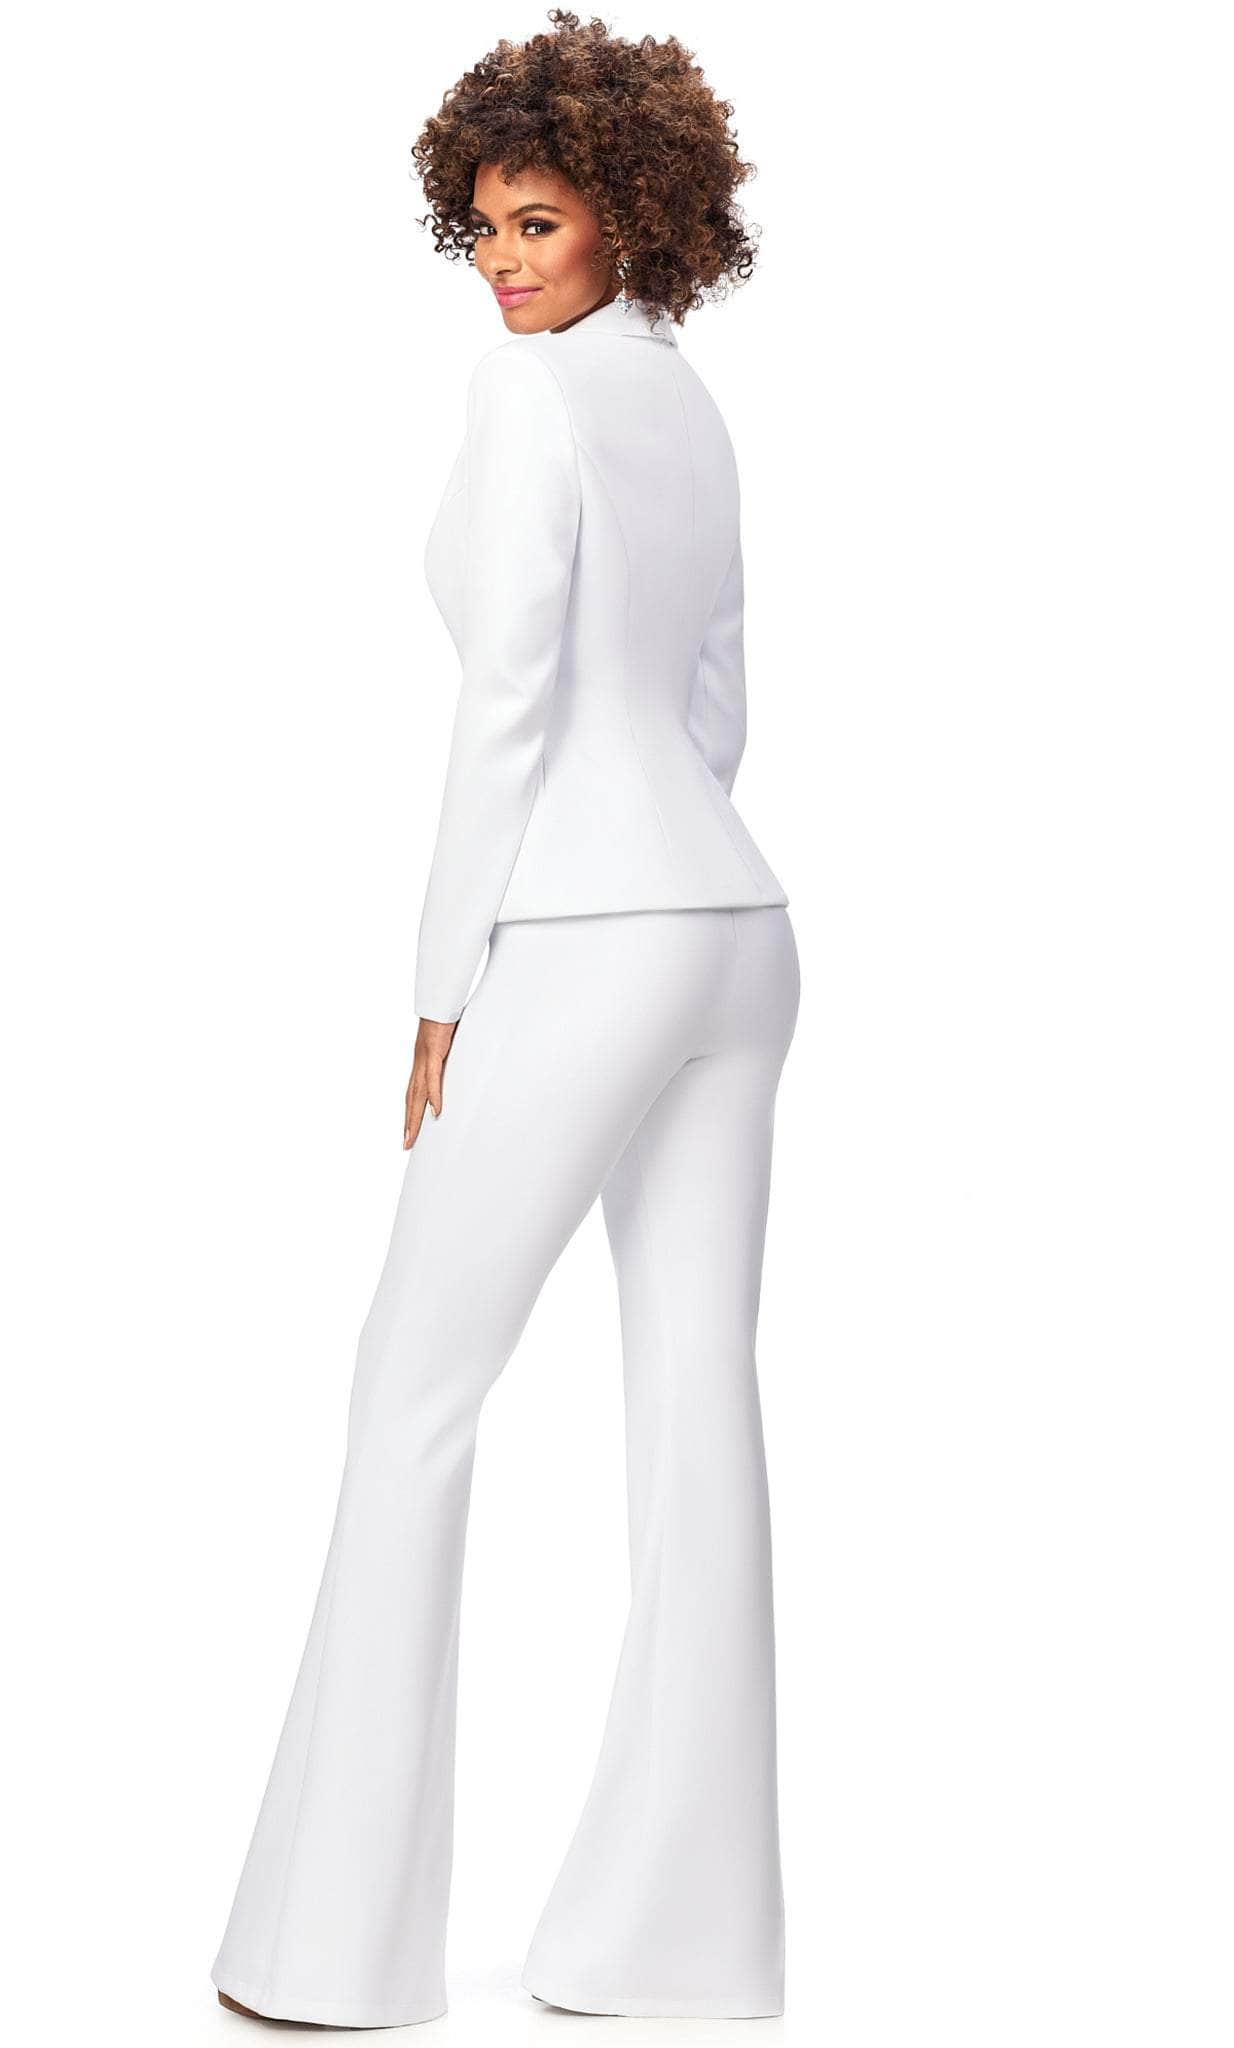 Ashley Lauren 11225 - Two Piece Long Sleeve Pantsuit Special Occasion Dress